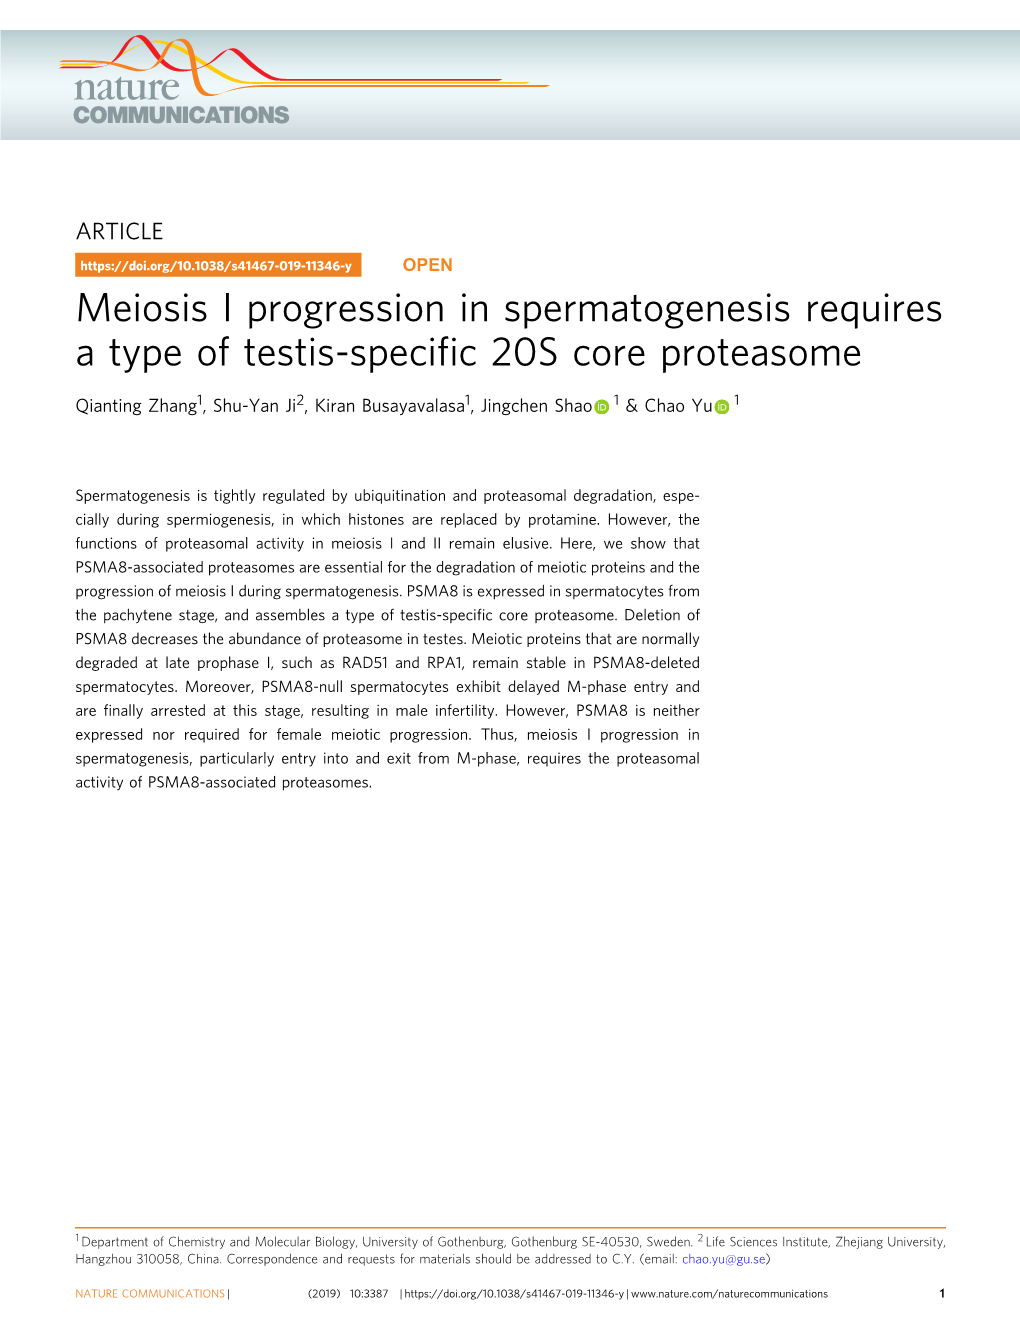 Meiosis I Progression in Spermatogenesis Requires a Type of Testis-Speciﬁc 20S Core Proteasome